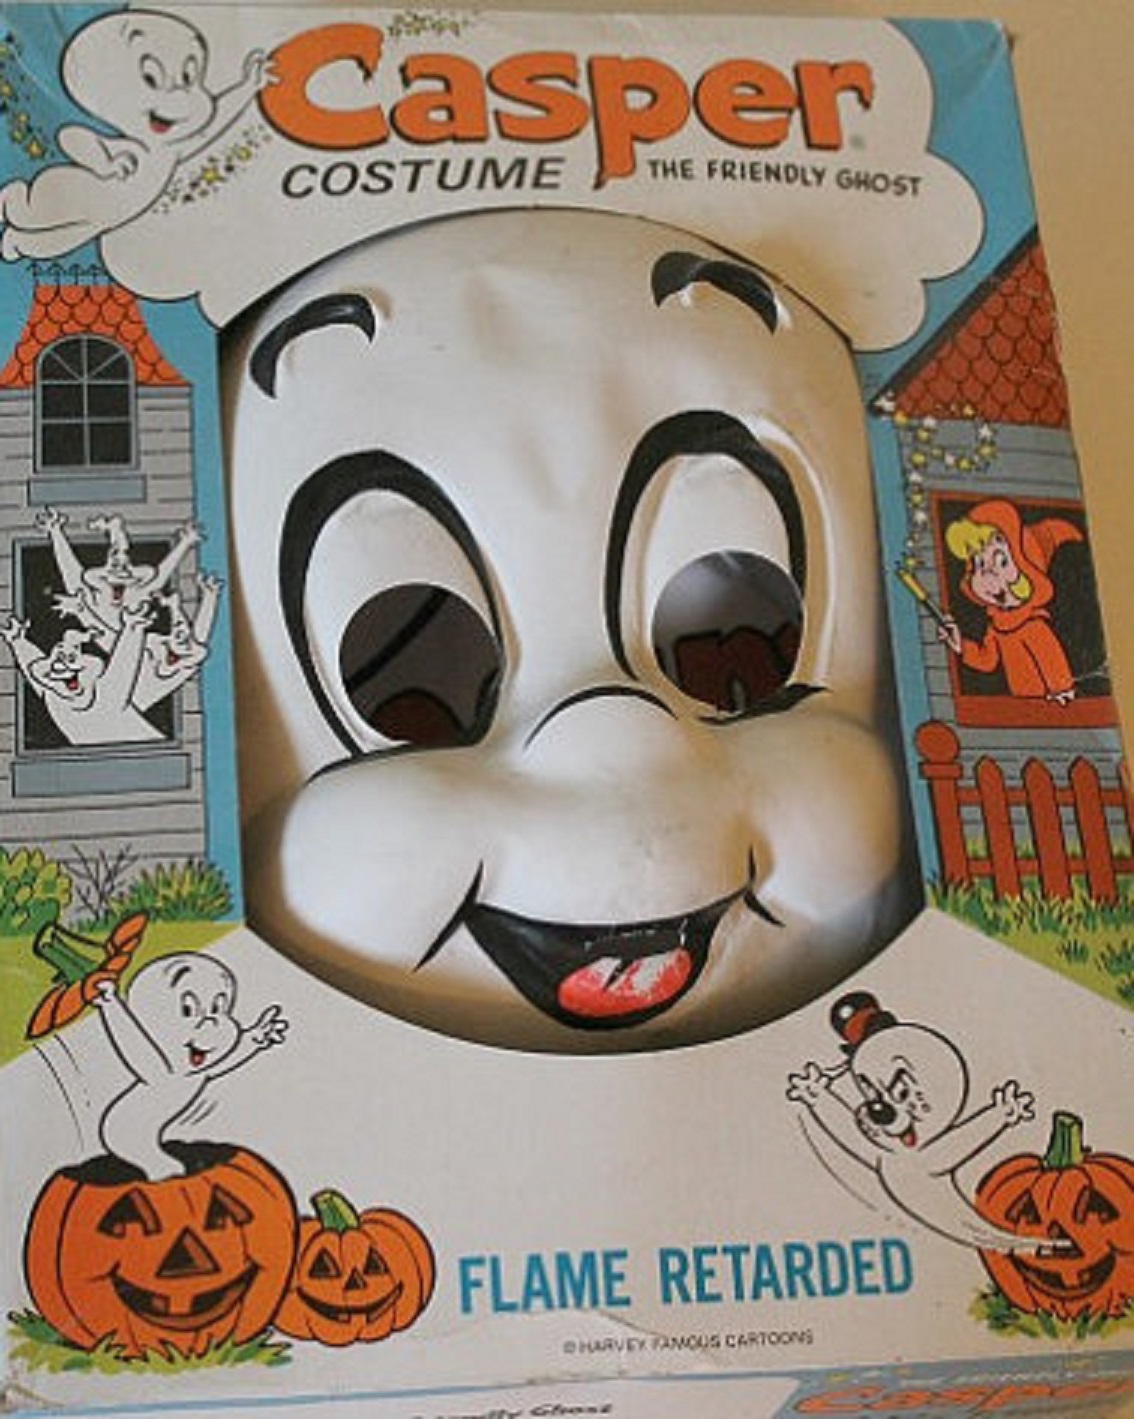 Halloween Costume of the Week: Casper the Friendly Ghost.